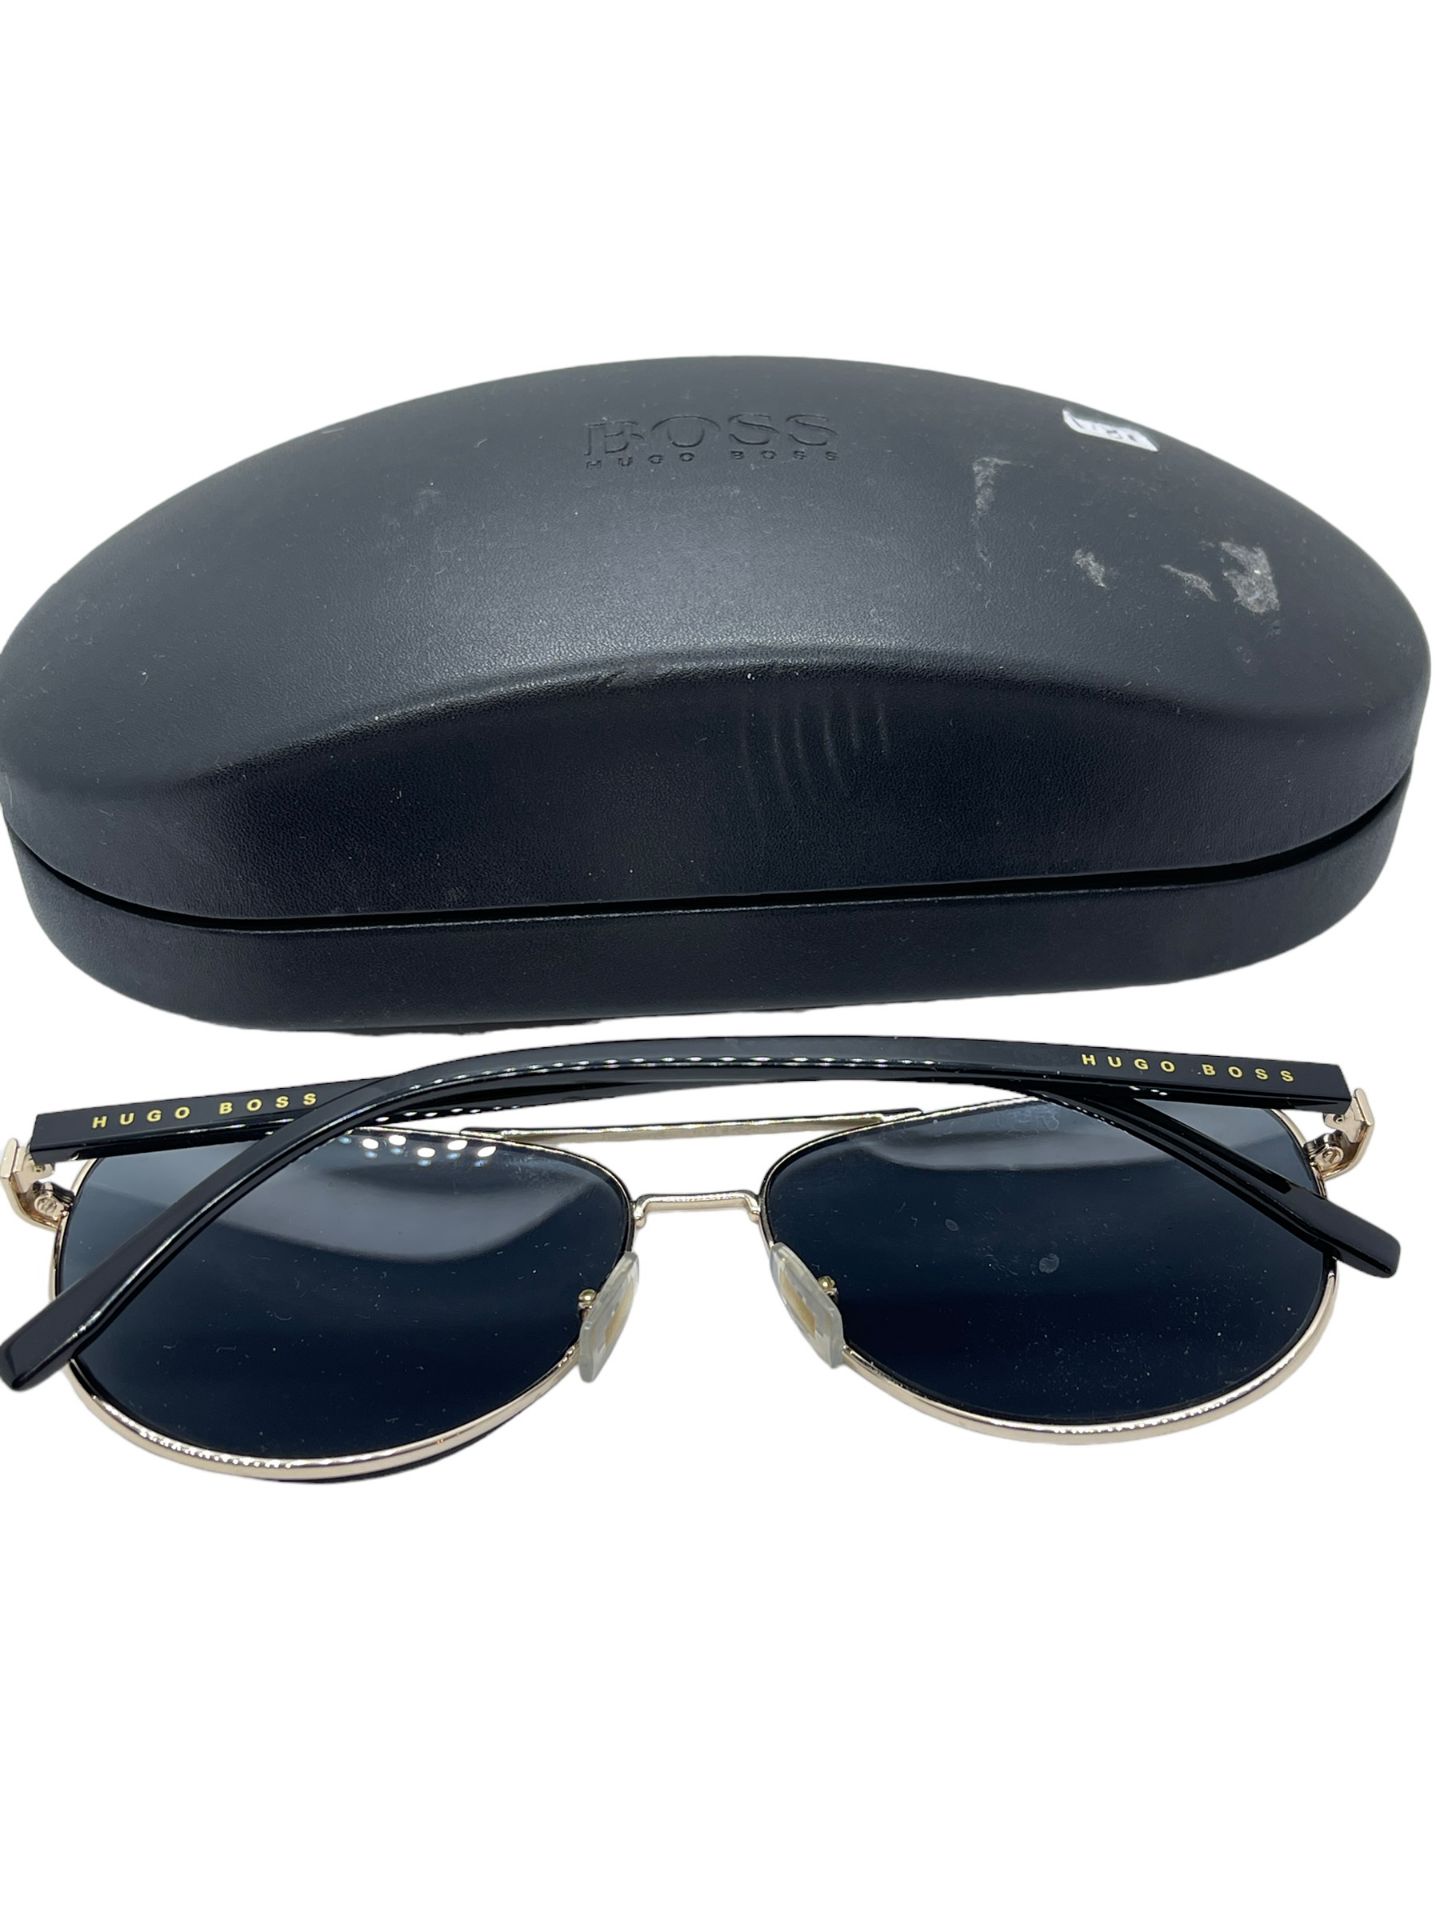 Hugo Boss Sunglasses gold plated aviators with case surplus stock xdemo - Bild 6 aus 6